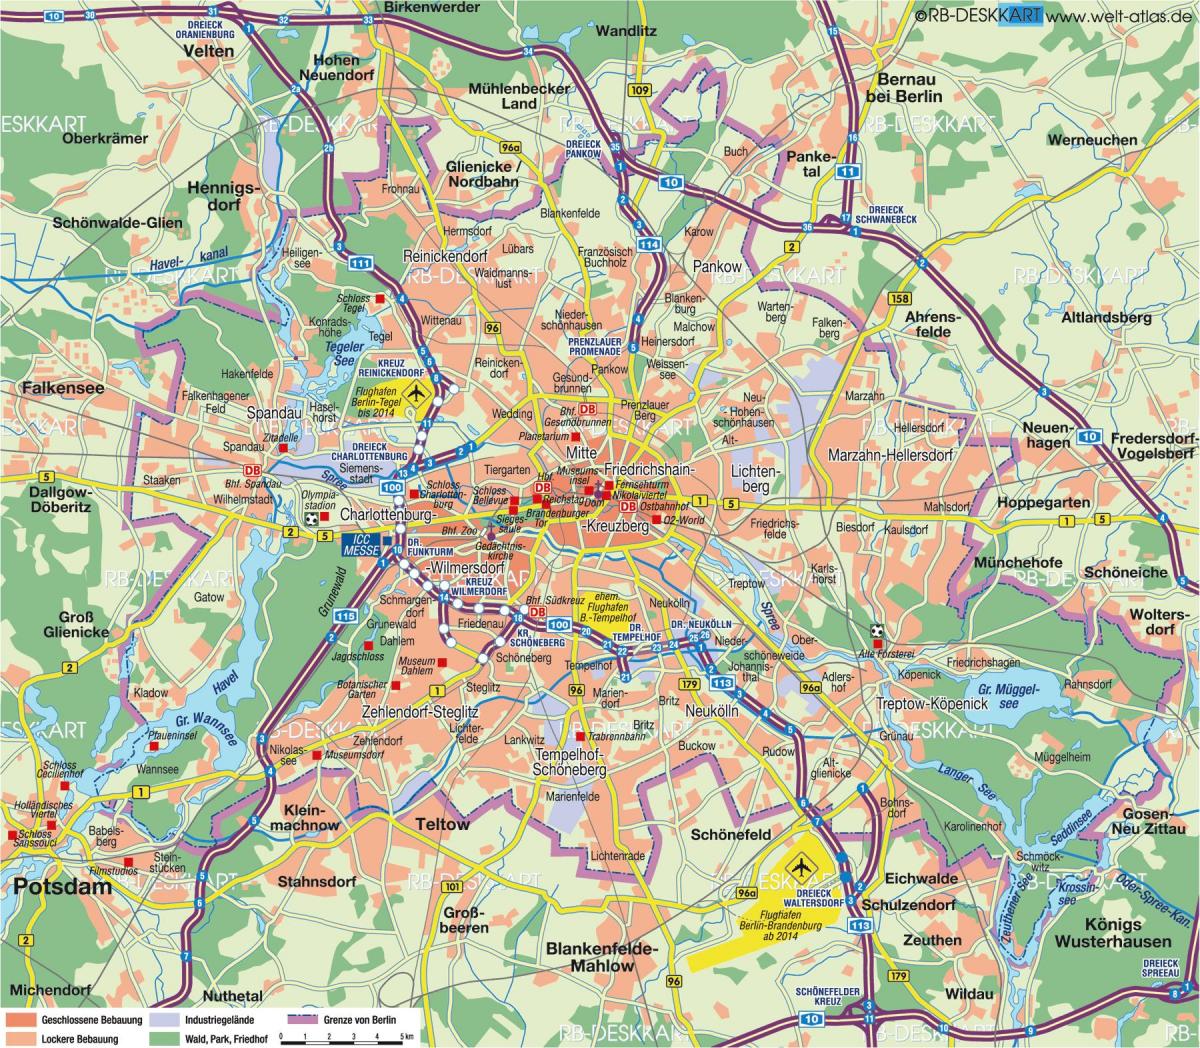 plan de la ville de berlin